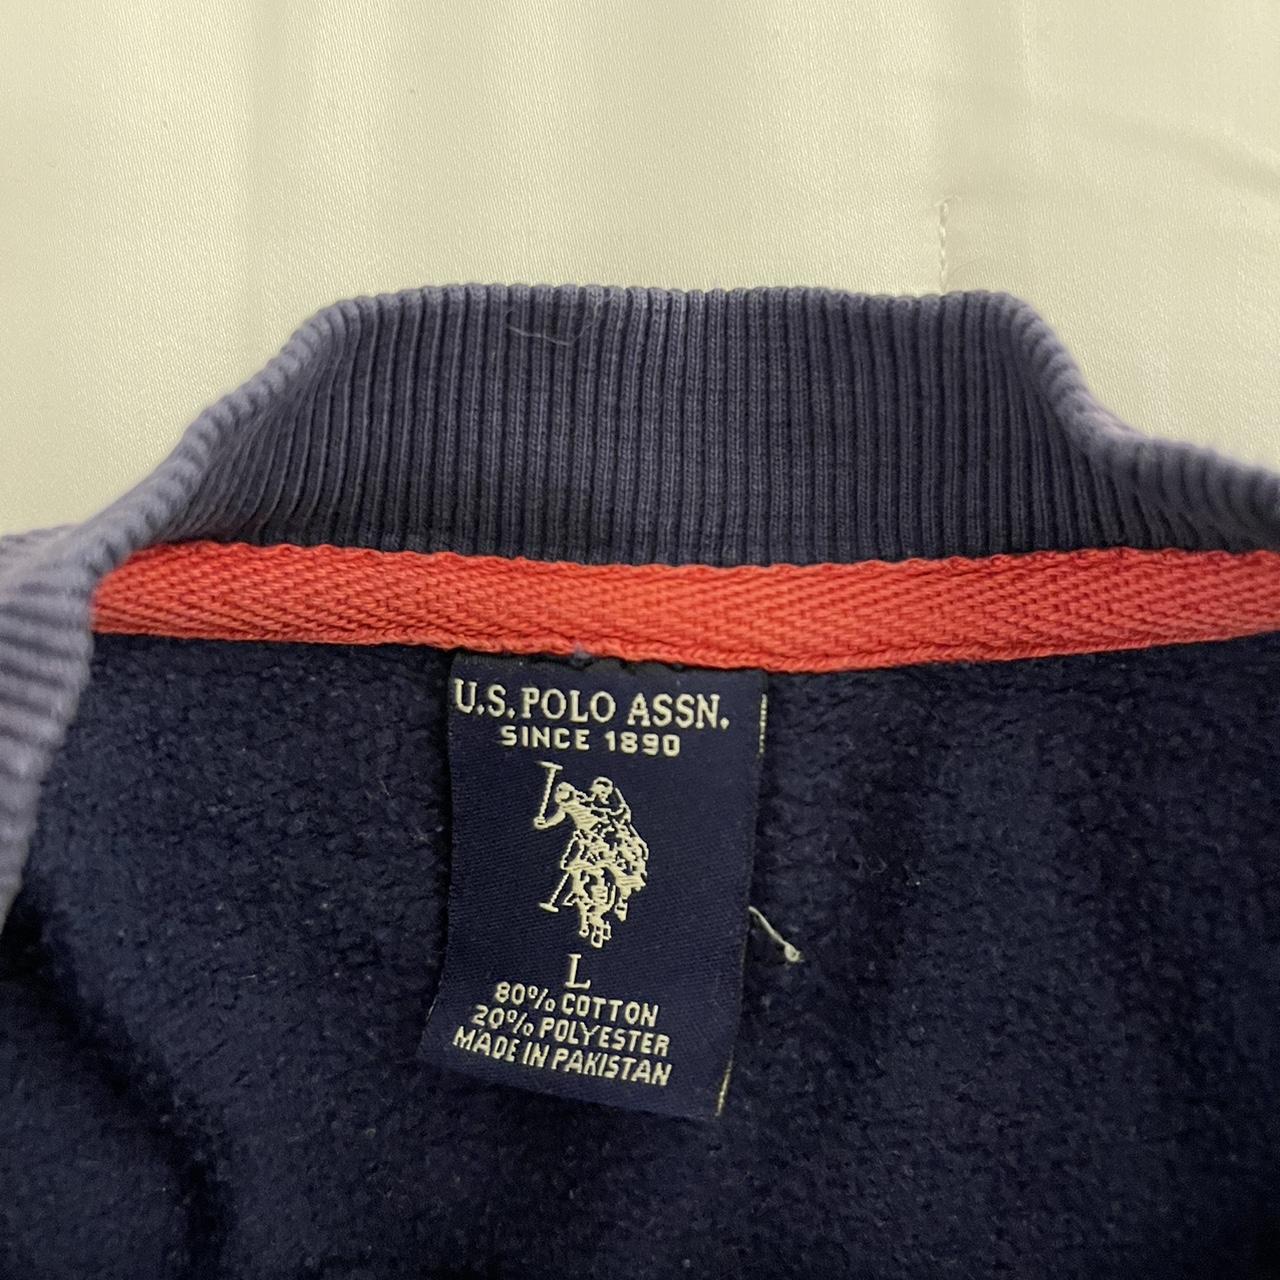 U.S. Polo Assn. Women's Navy and Red Sweatshirt (2)